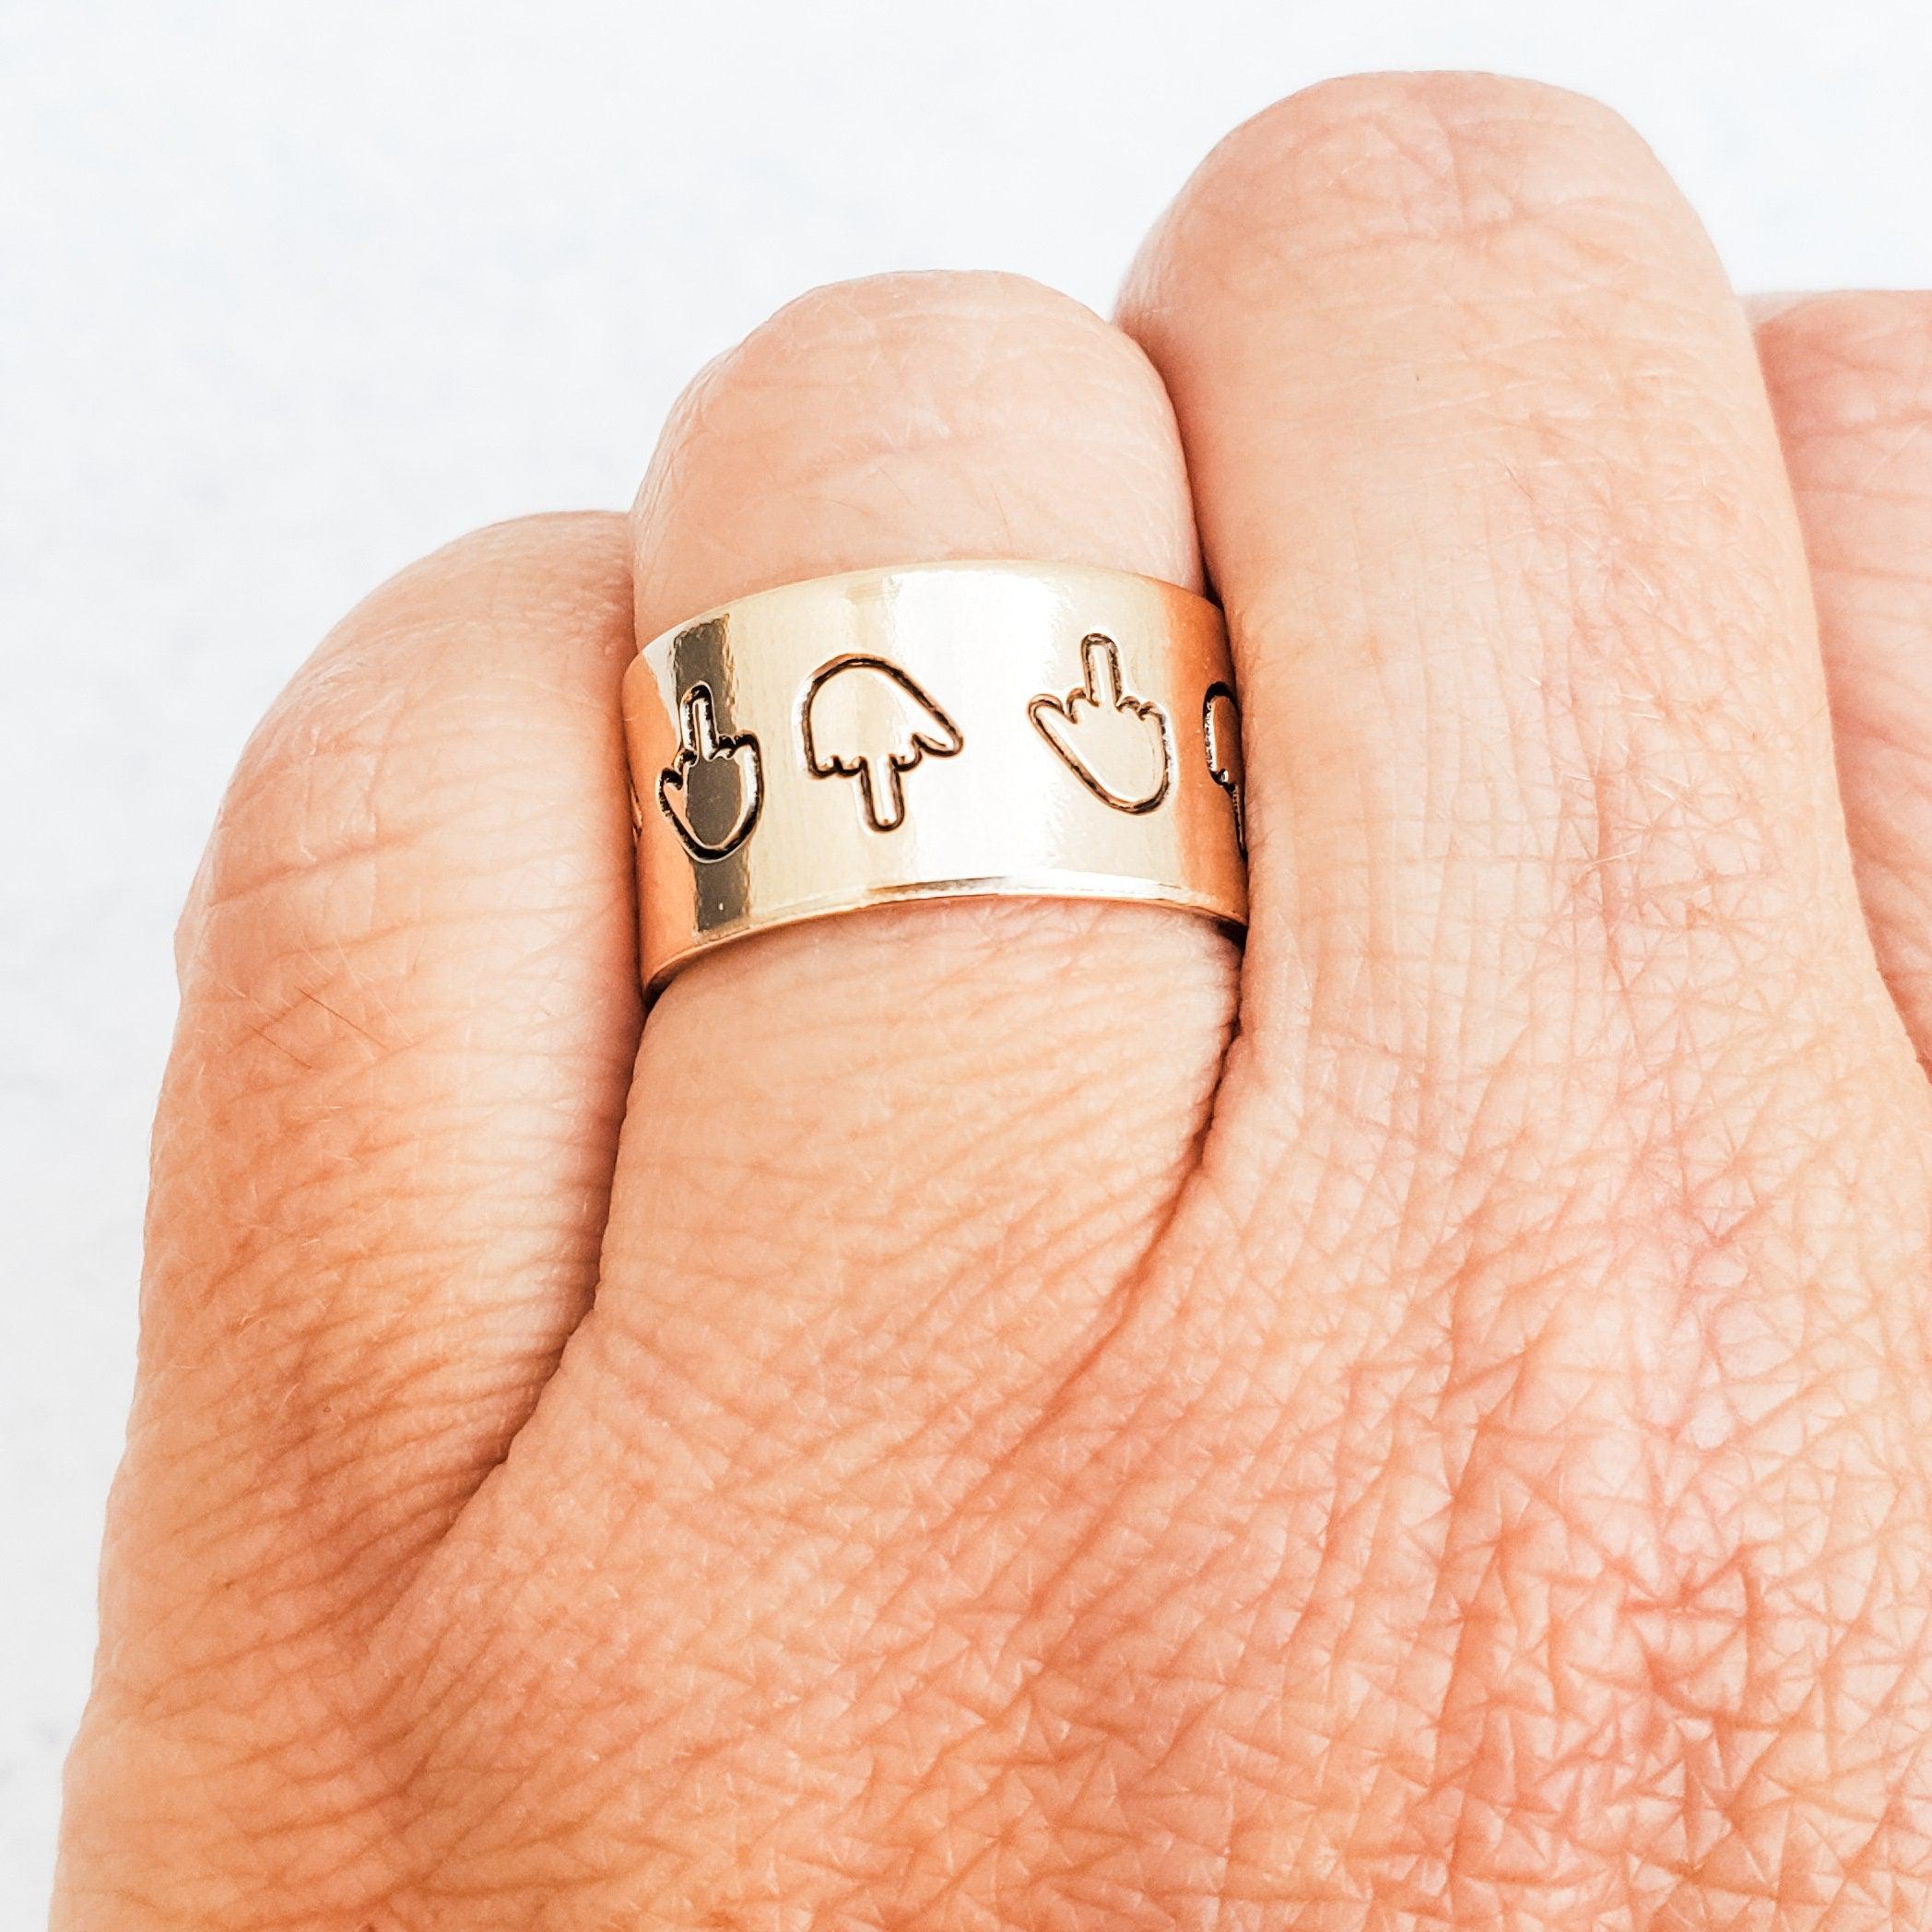 Gold Middle Finger Ring - 14k Gold Filled Middle Finger Tiktok Ring - FU Gag Gift - Gender Neutral Gold Ring - Matching Funny F*ck You Ring